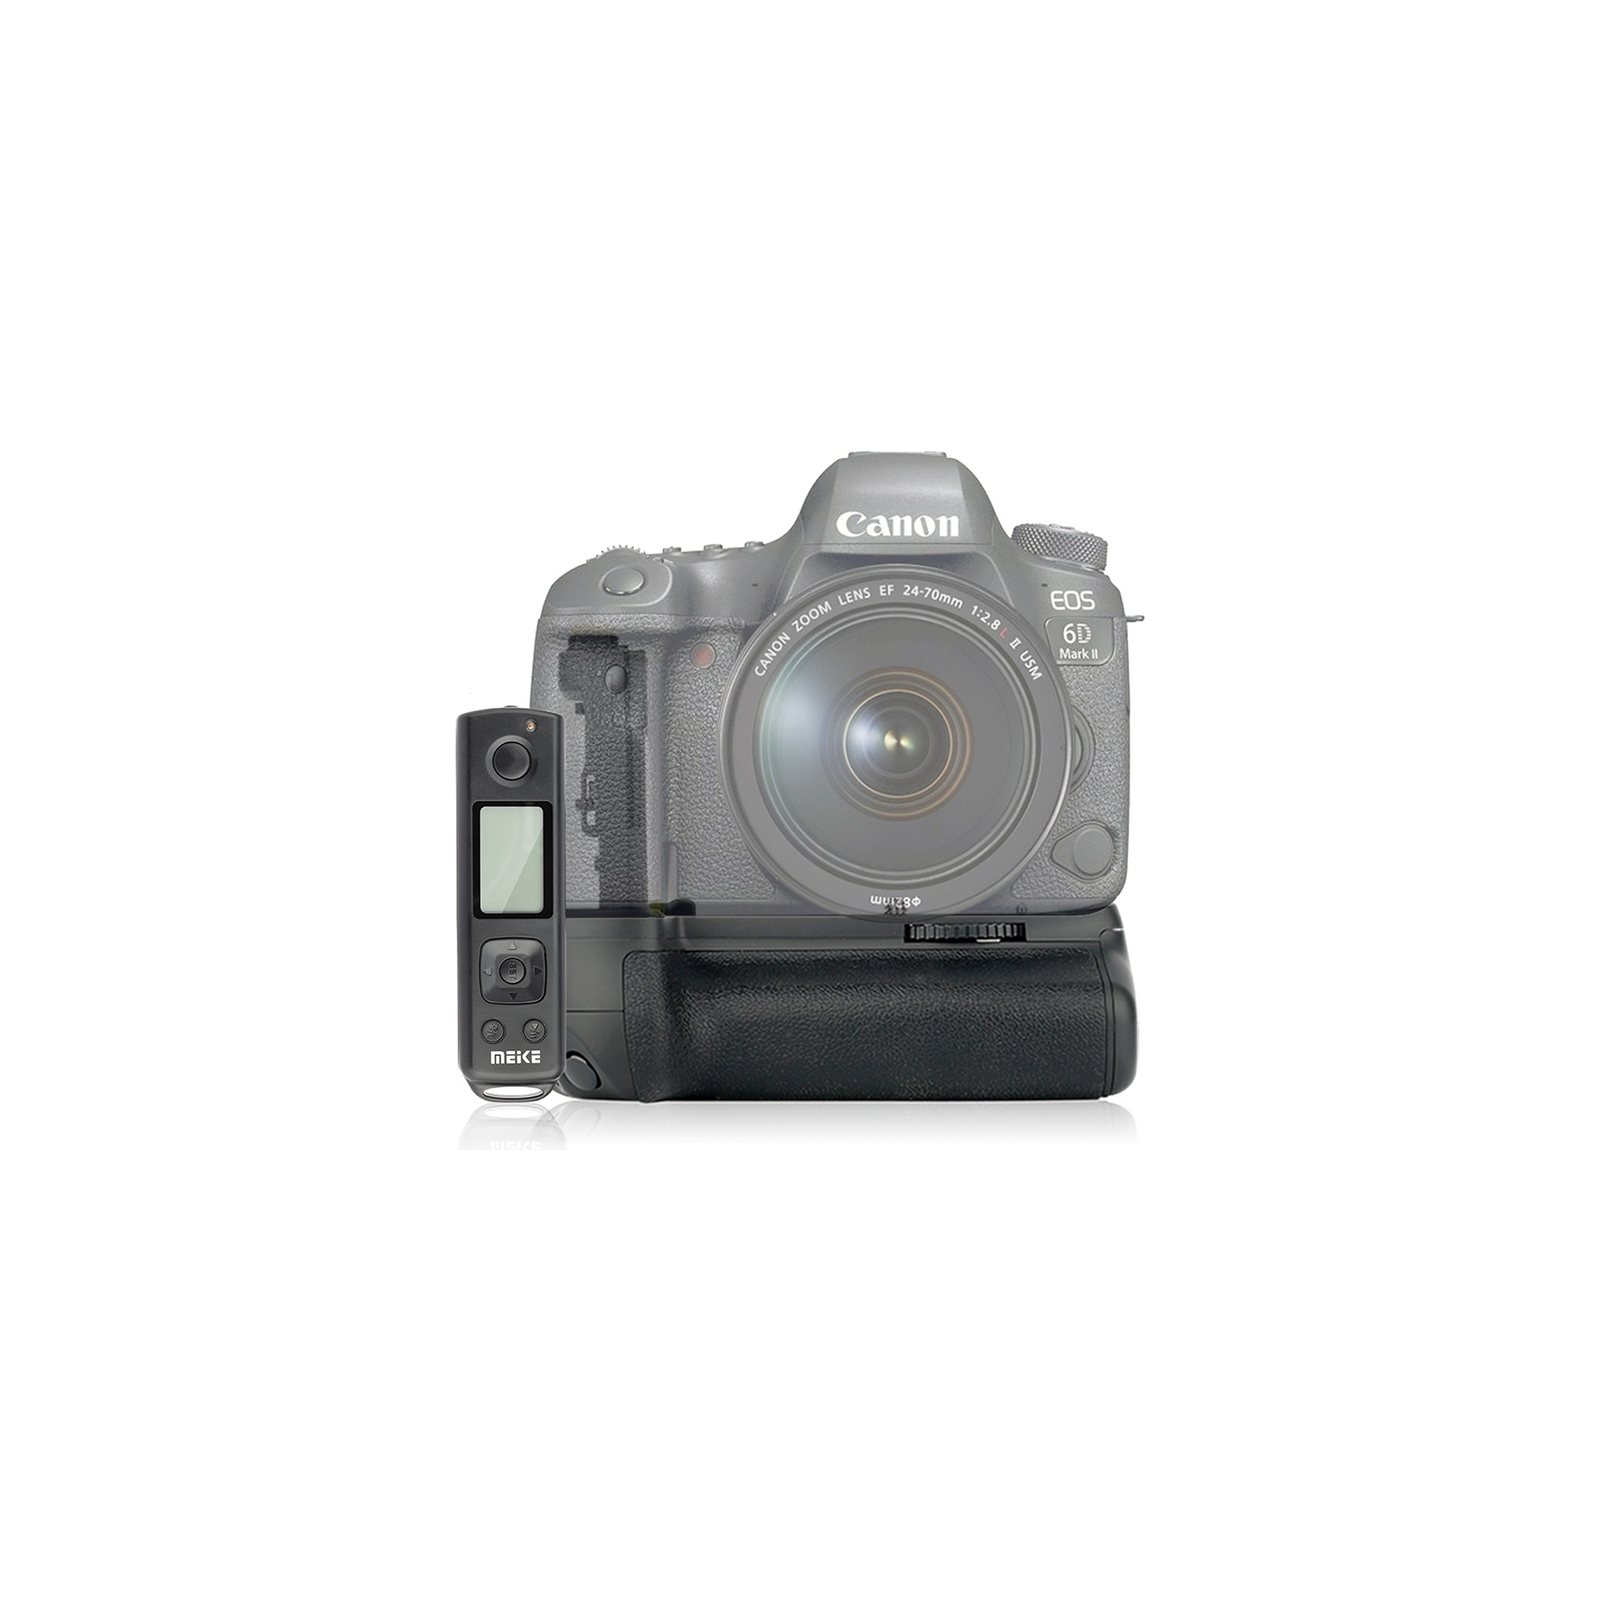 Батарейный блок Meike Canon MK-6D2 PRO (BG950096) изображение 10